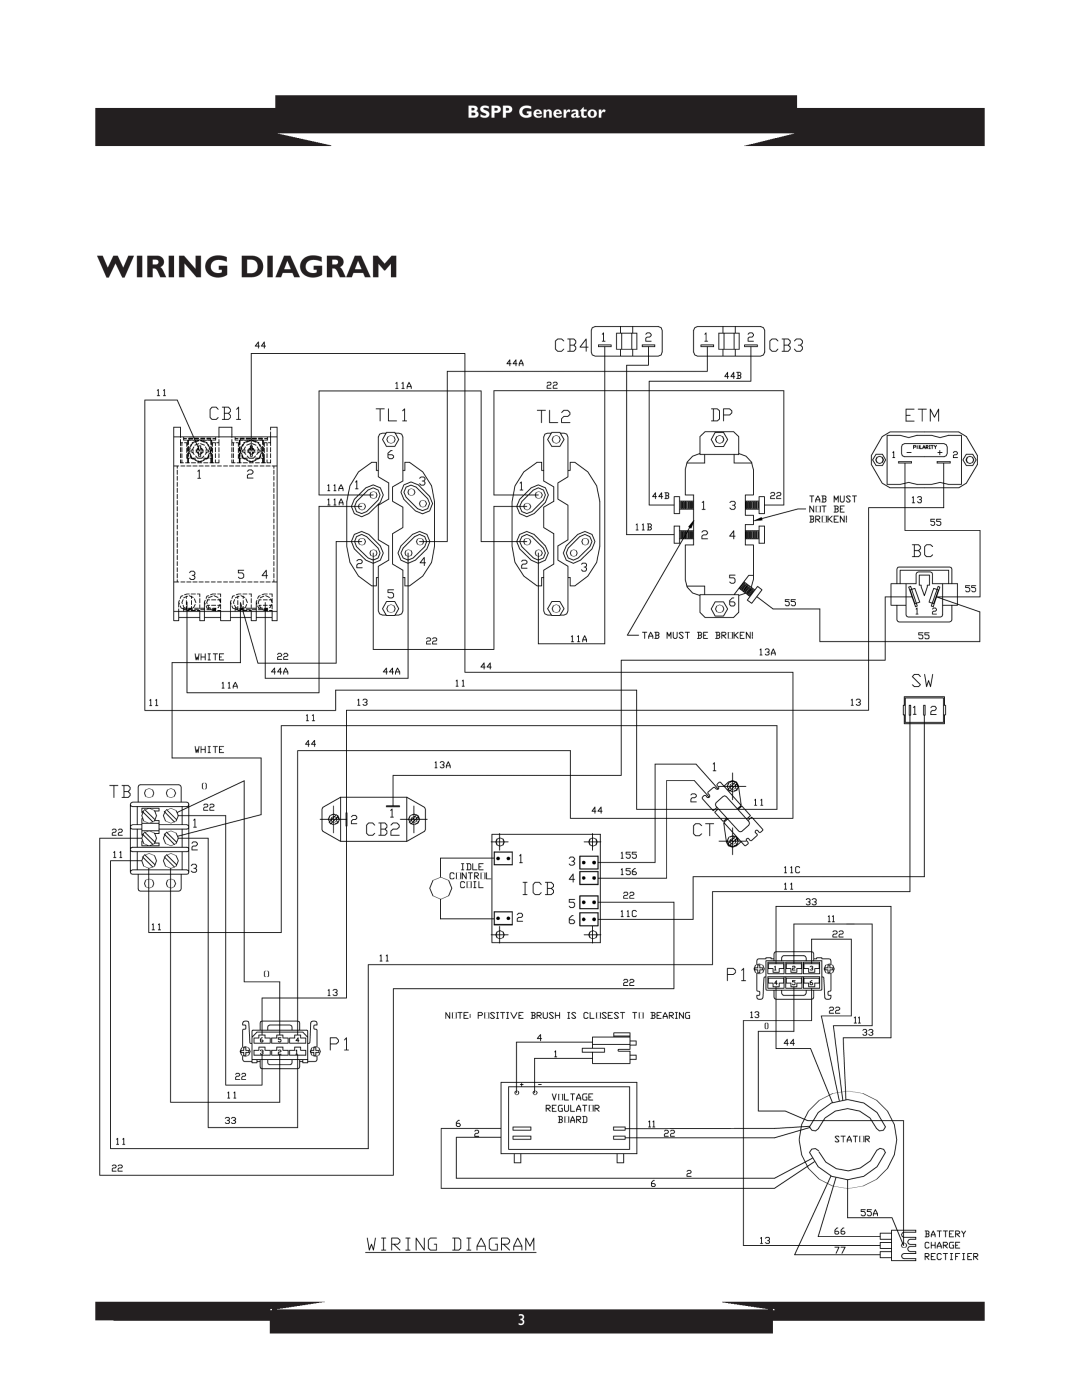 Briggs & Stratton 1933 manual Wiring Diagram, BSPP Generator 